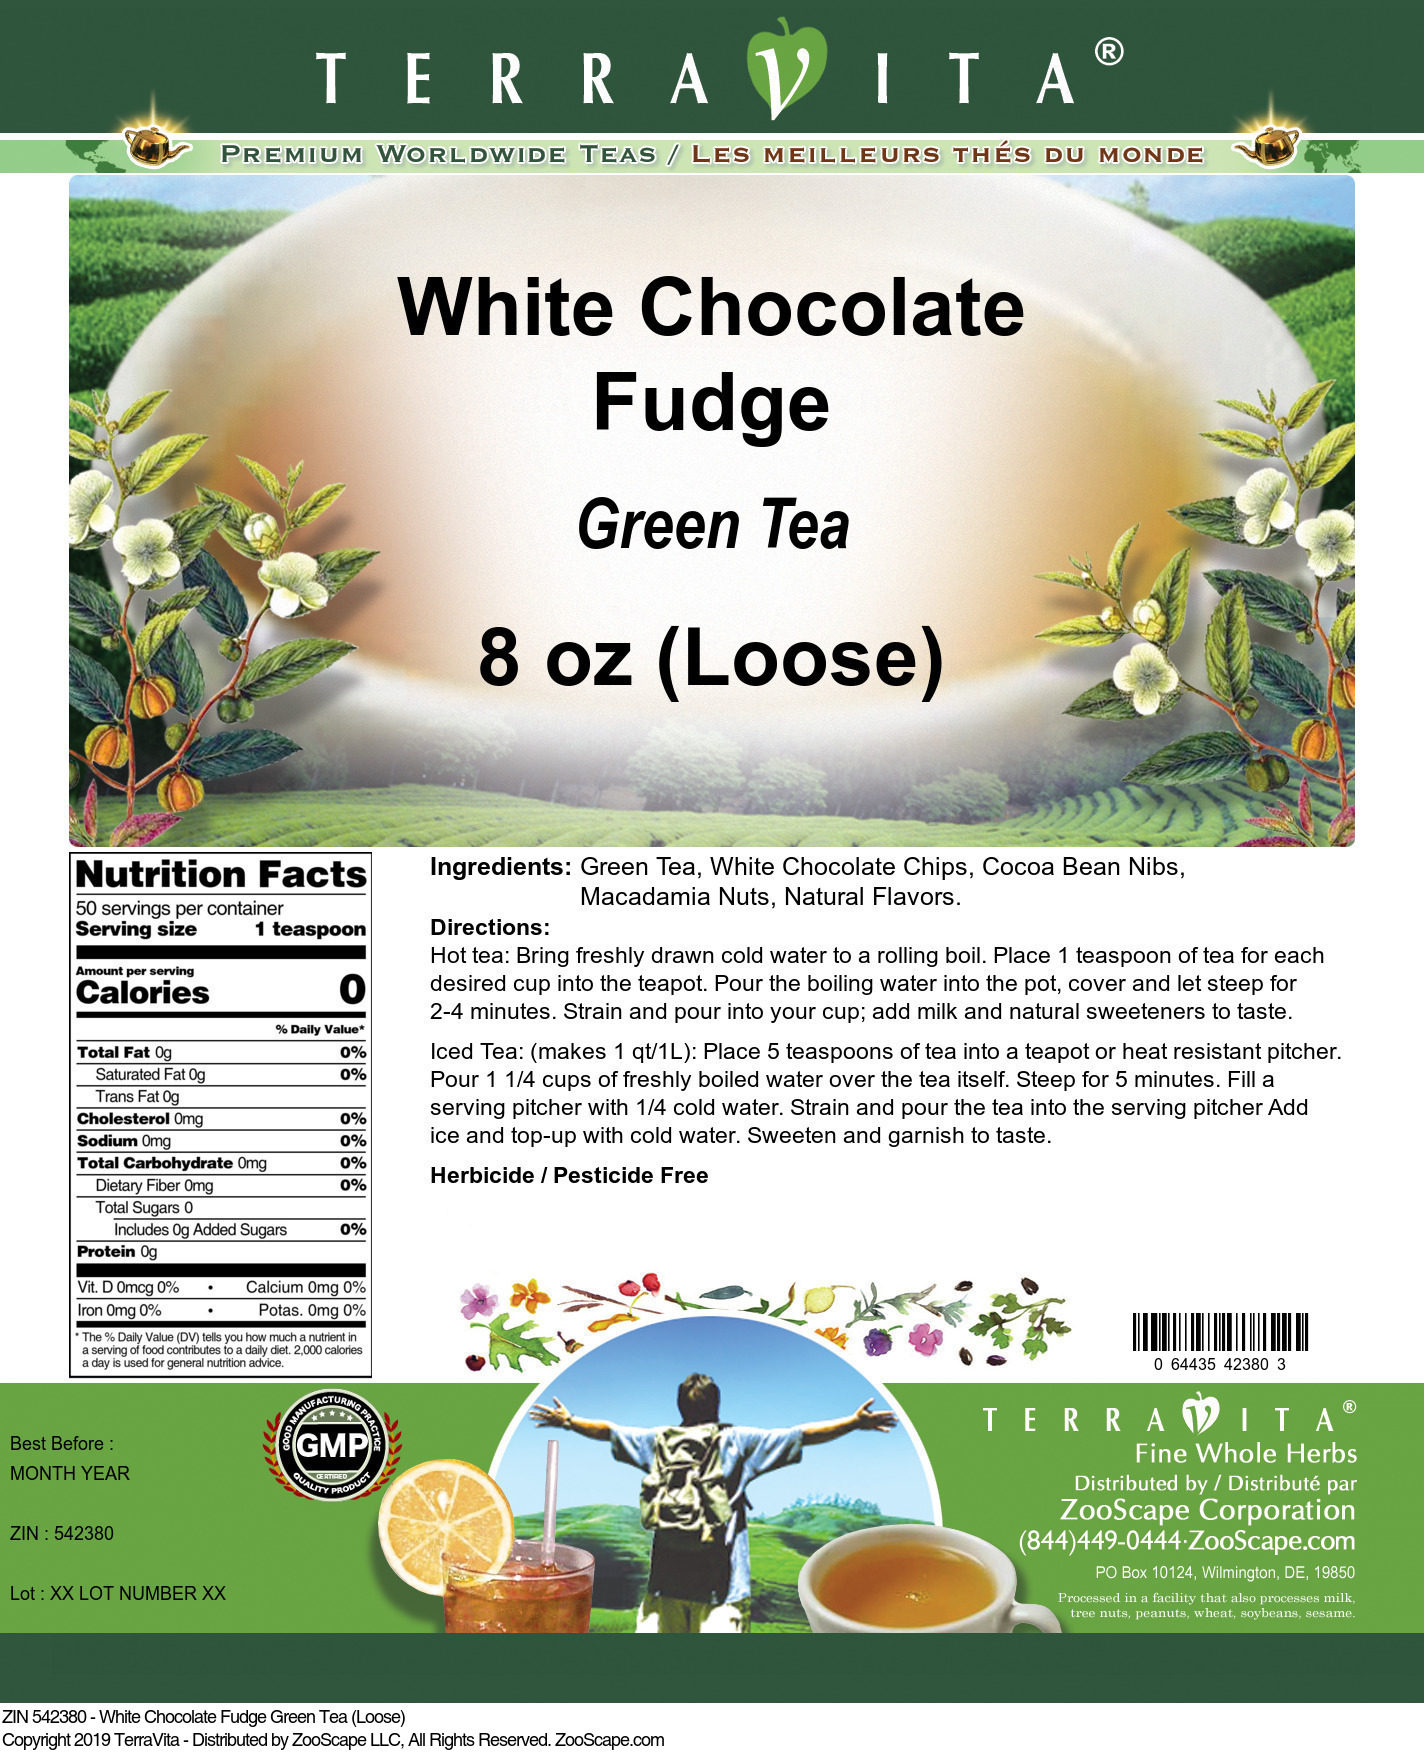 White Chocolate Fudge Green Tea (Loose) - Label